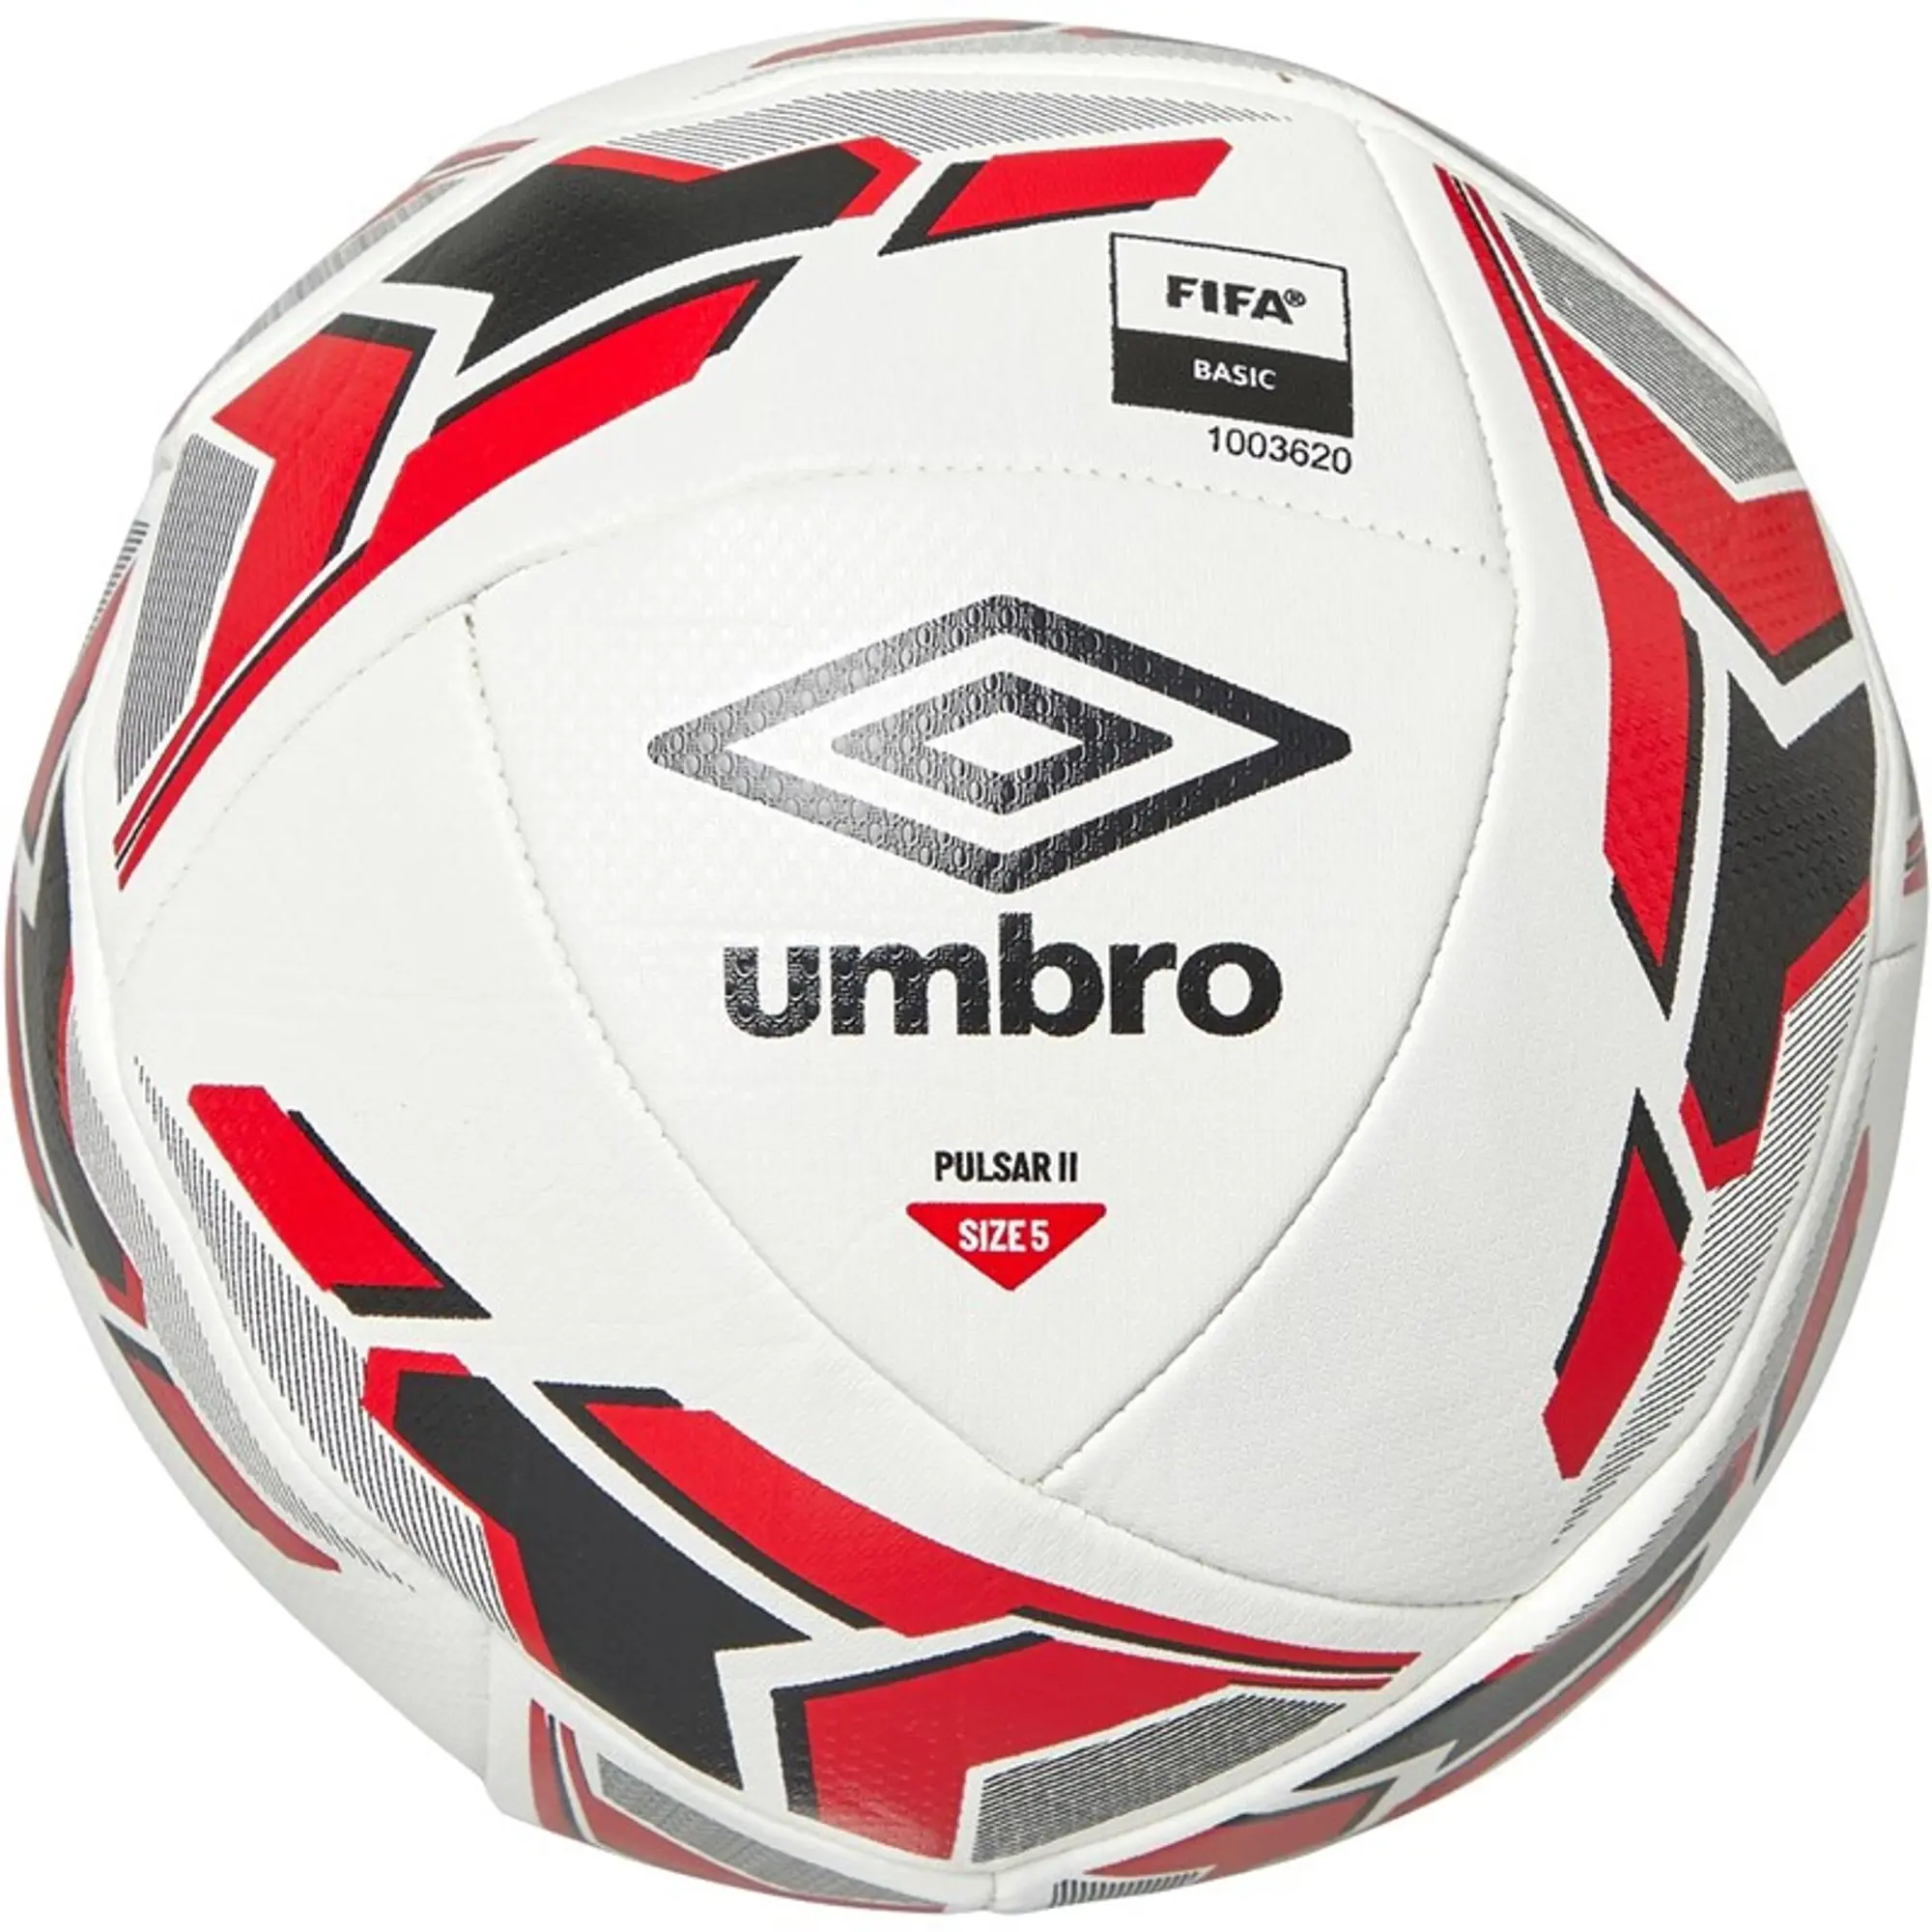 Umbro Pulsar 16 Match Football (FIFA Basic Certified) White/Black/Vermillion